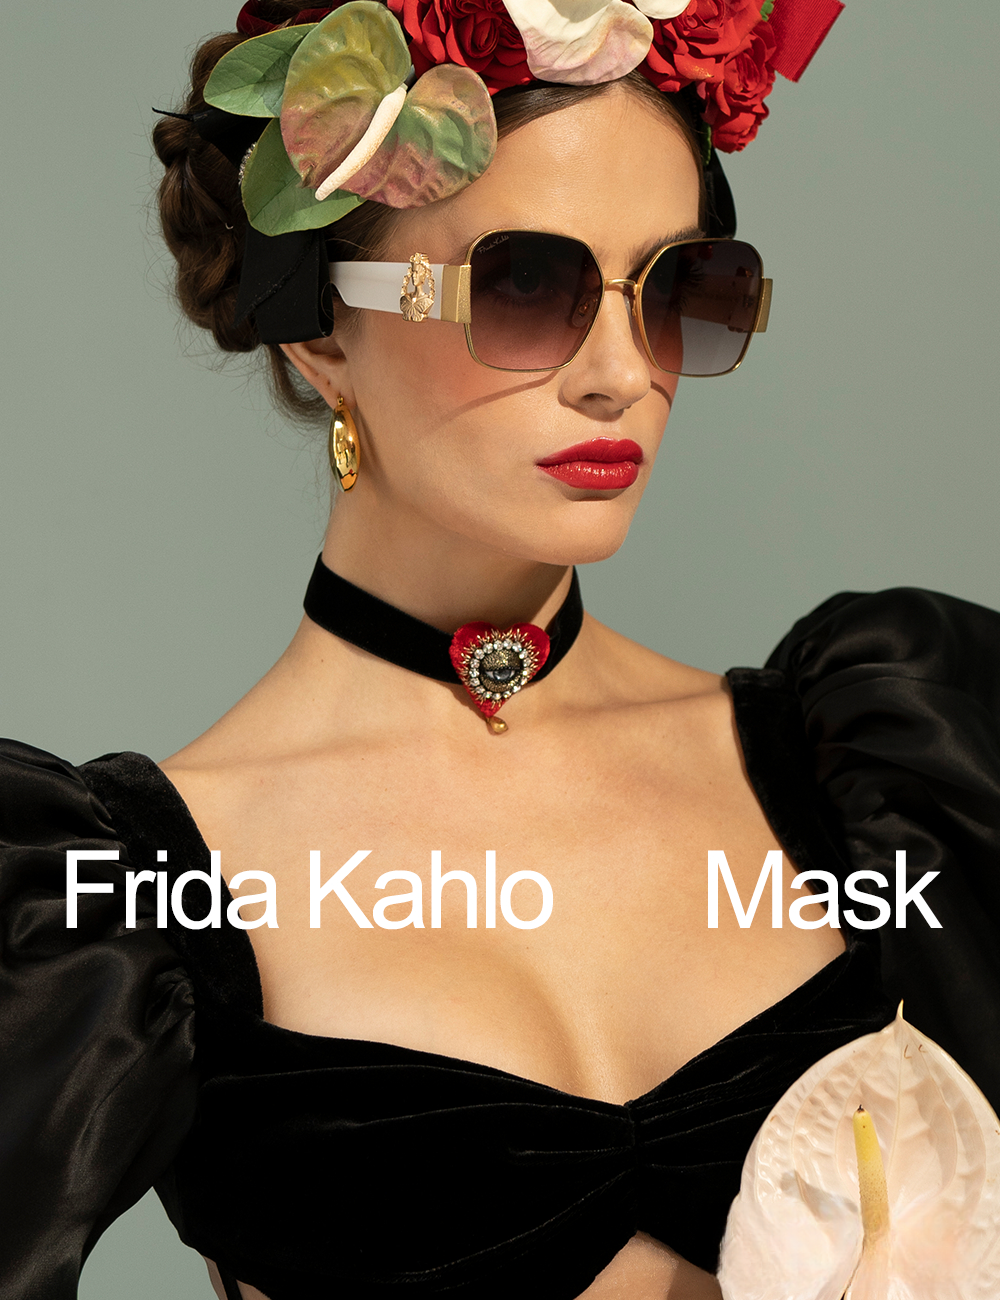 Frida Kahlo made a statement this season…